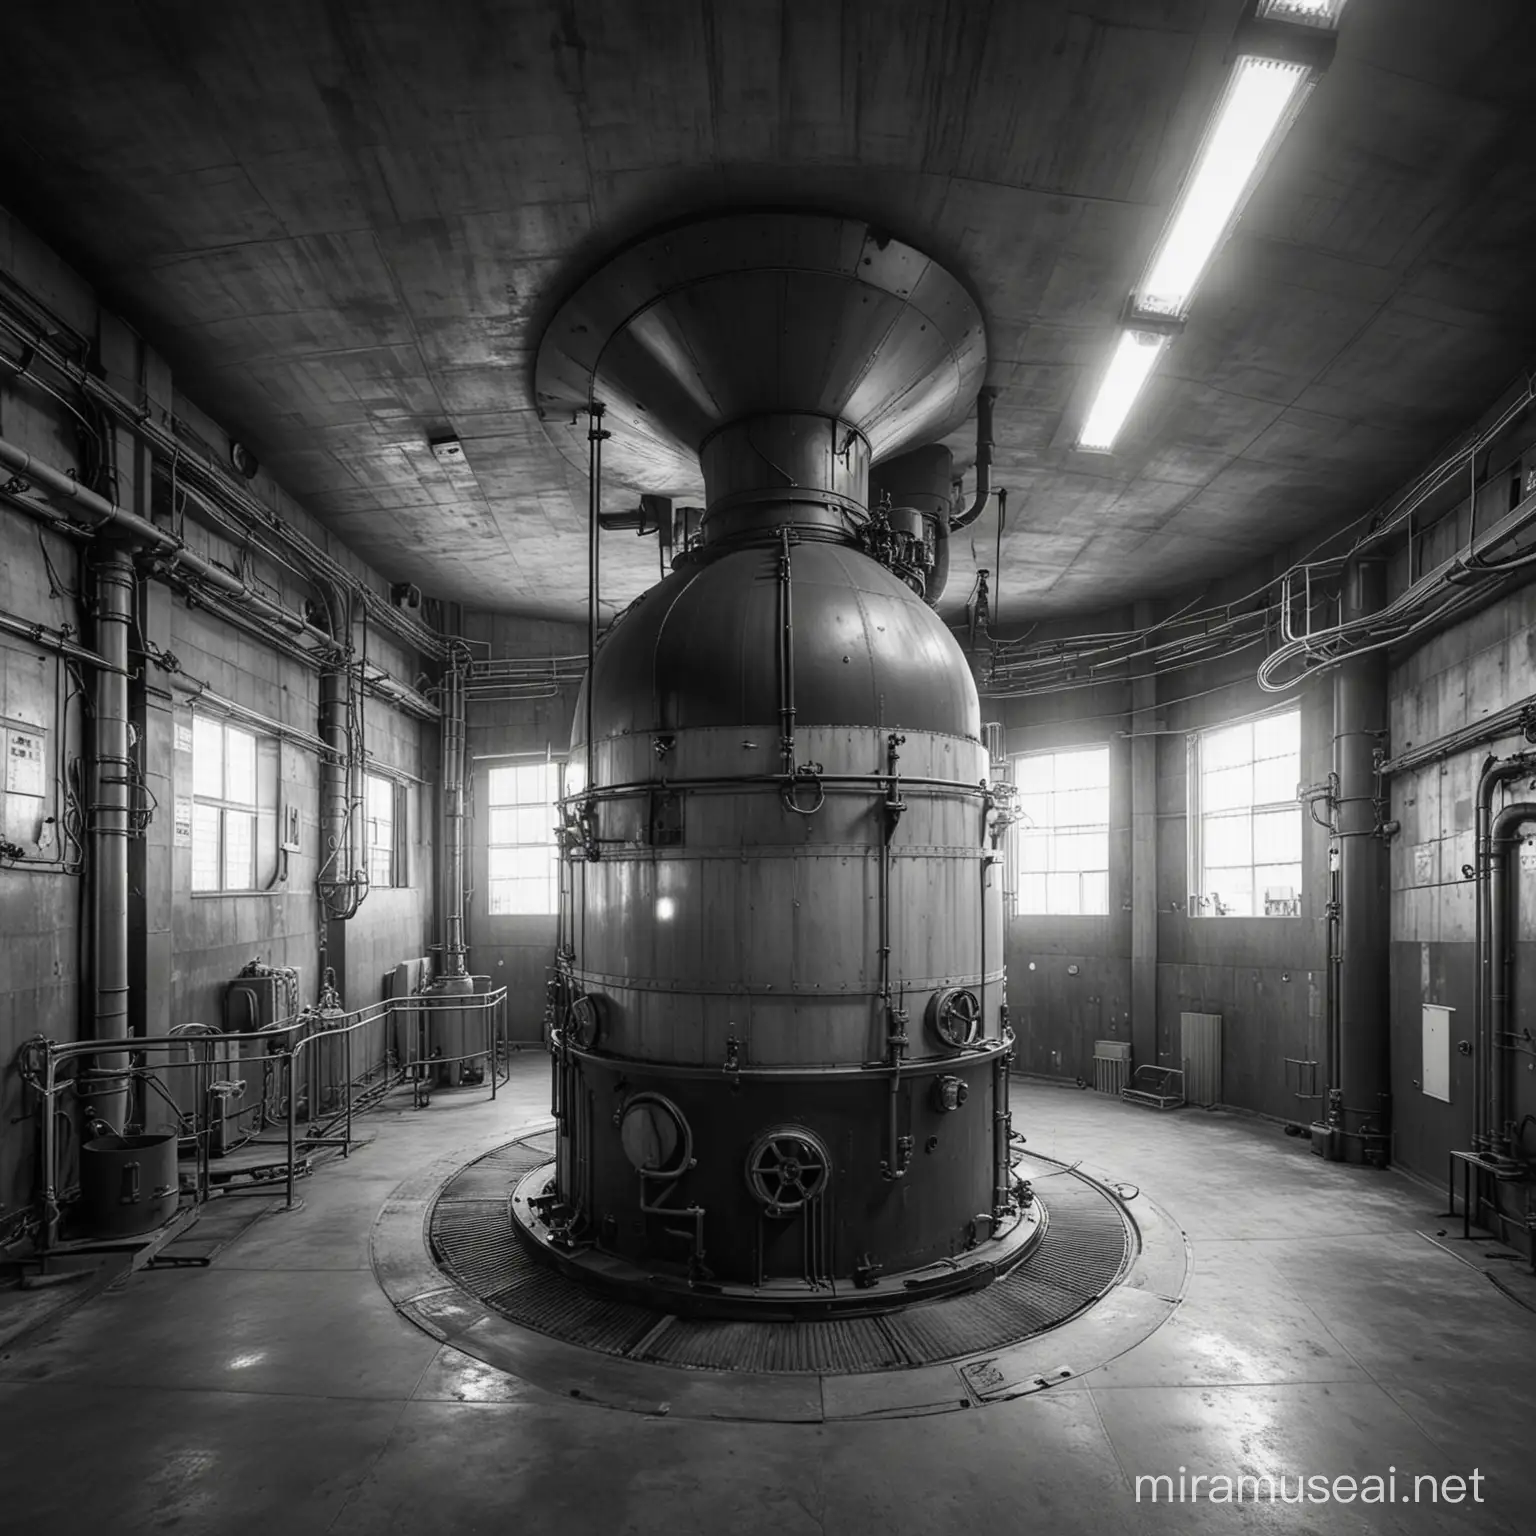 Vintage Black and White Photo of RetroStyle Reactor Interior